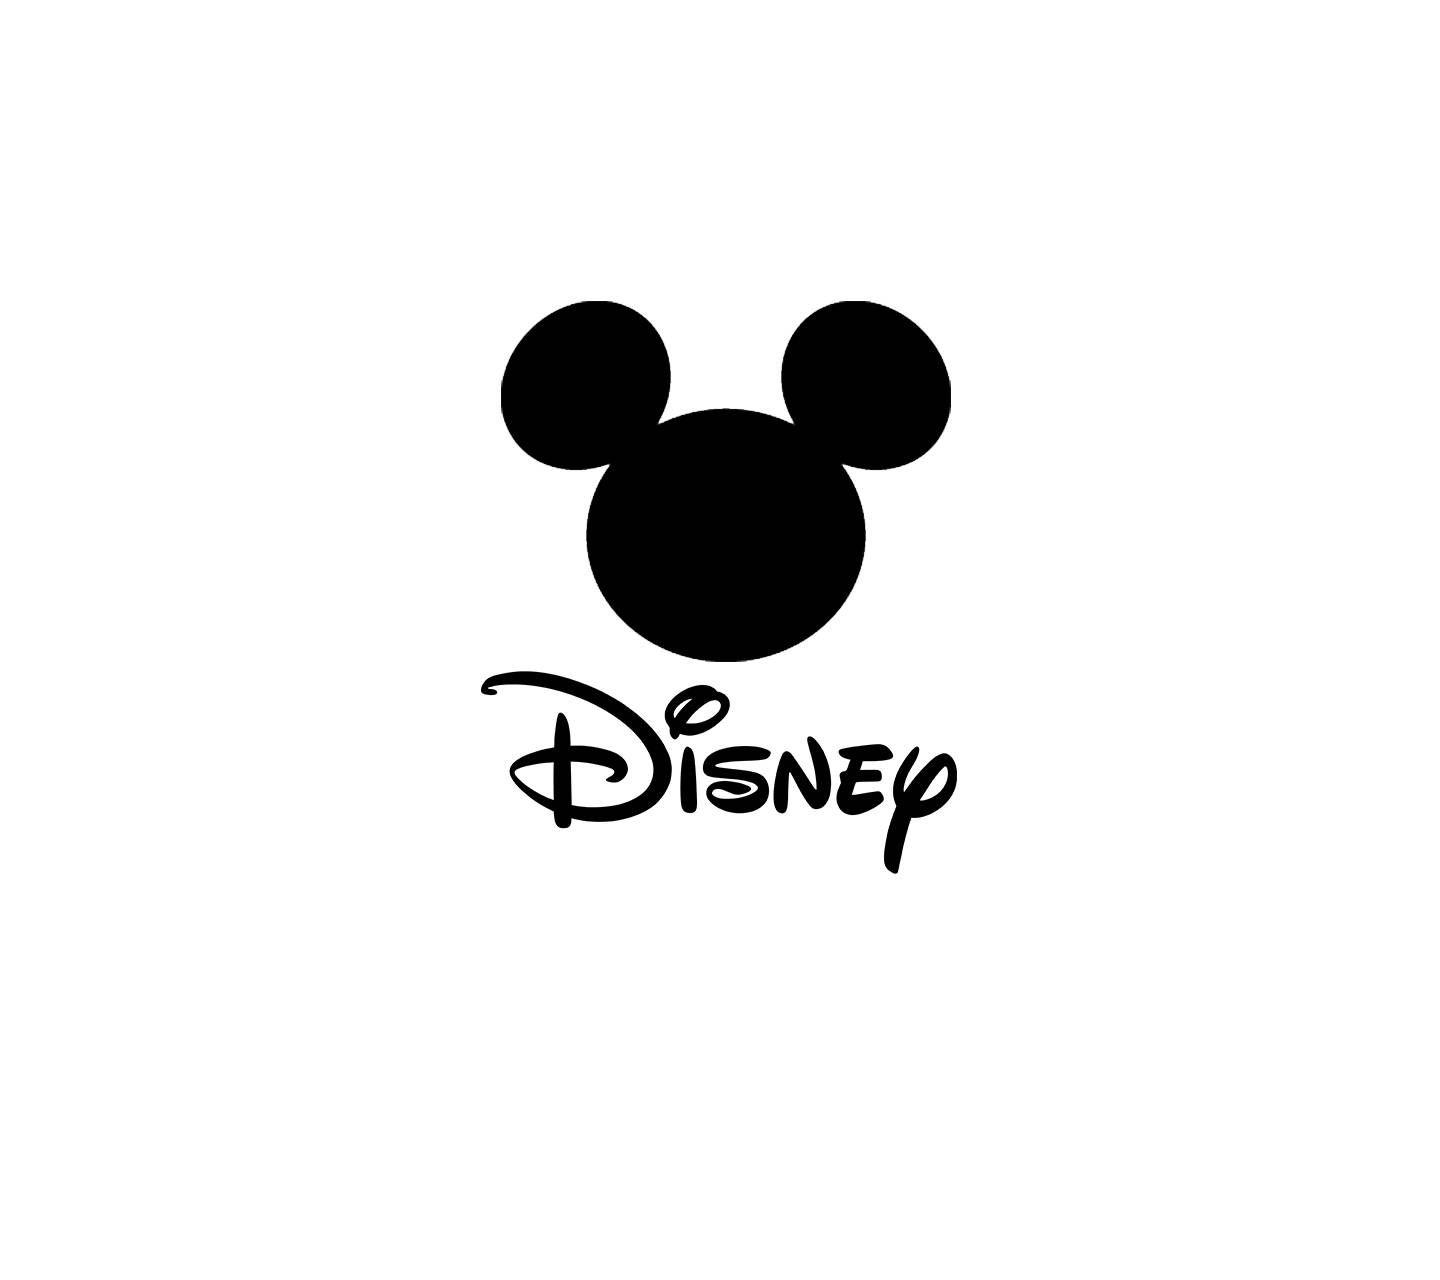 Disne Logo - Disney Logo White Wallpaper by NeoMystic - 17 - Free on ZEDGE™